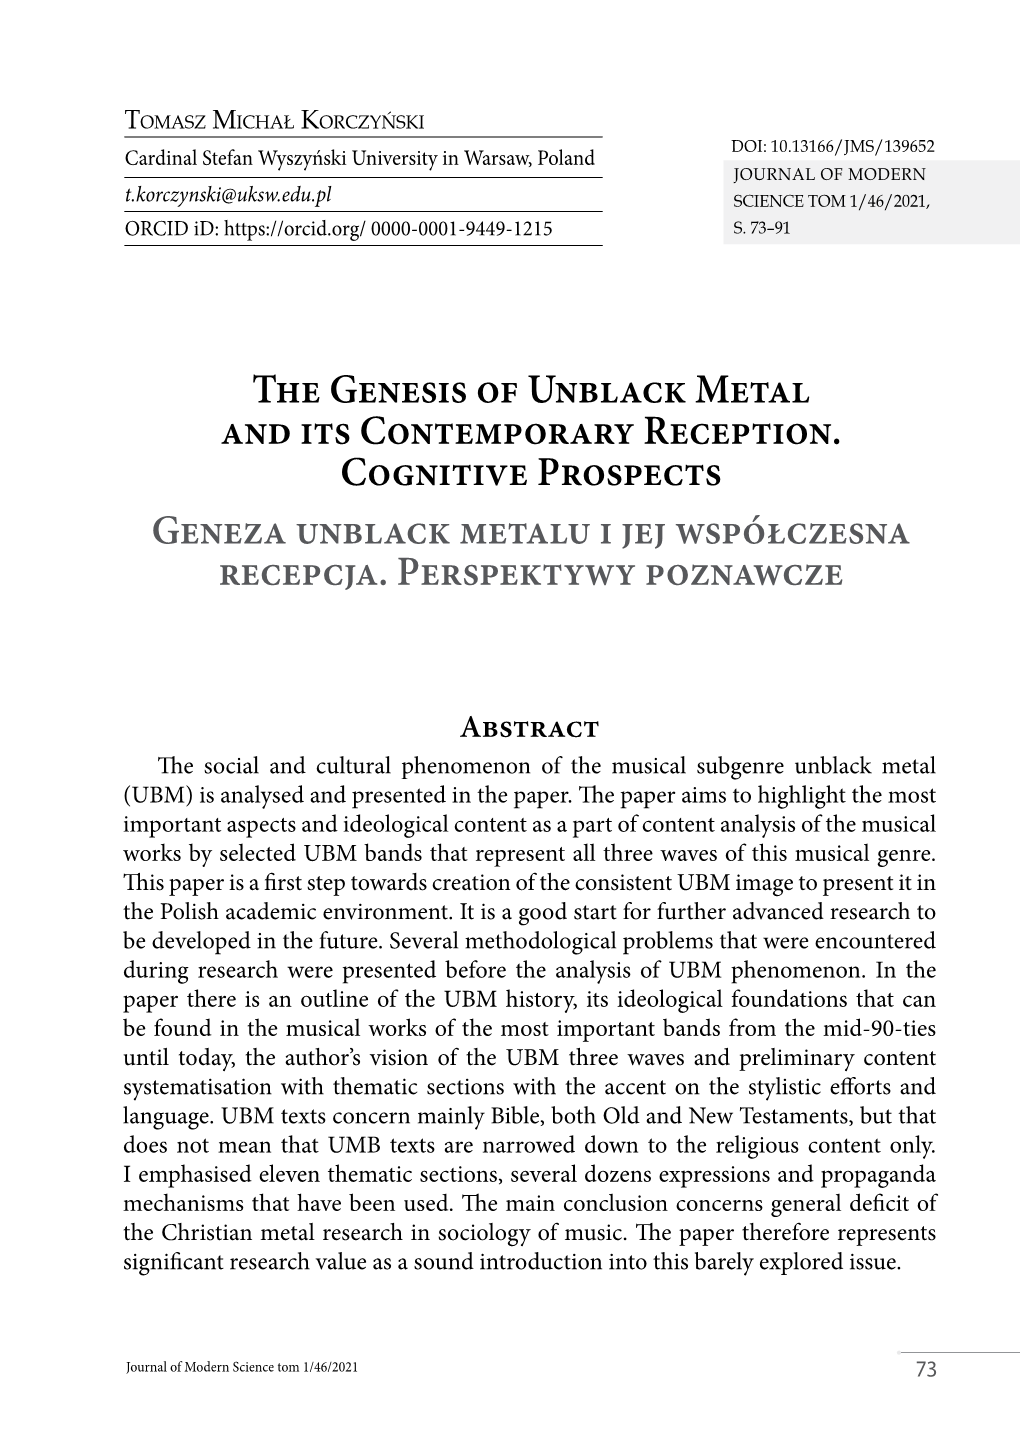 Geneza Unblack Metalu I.Pdf